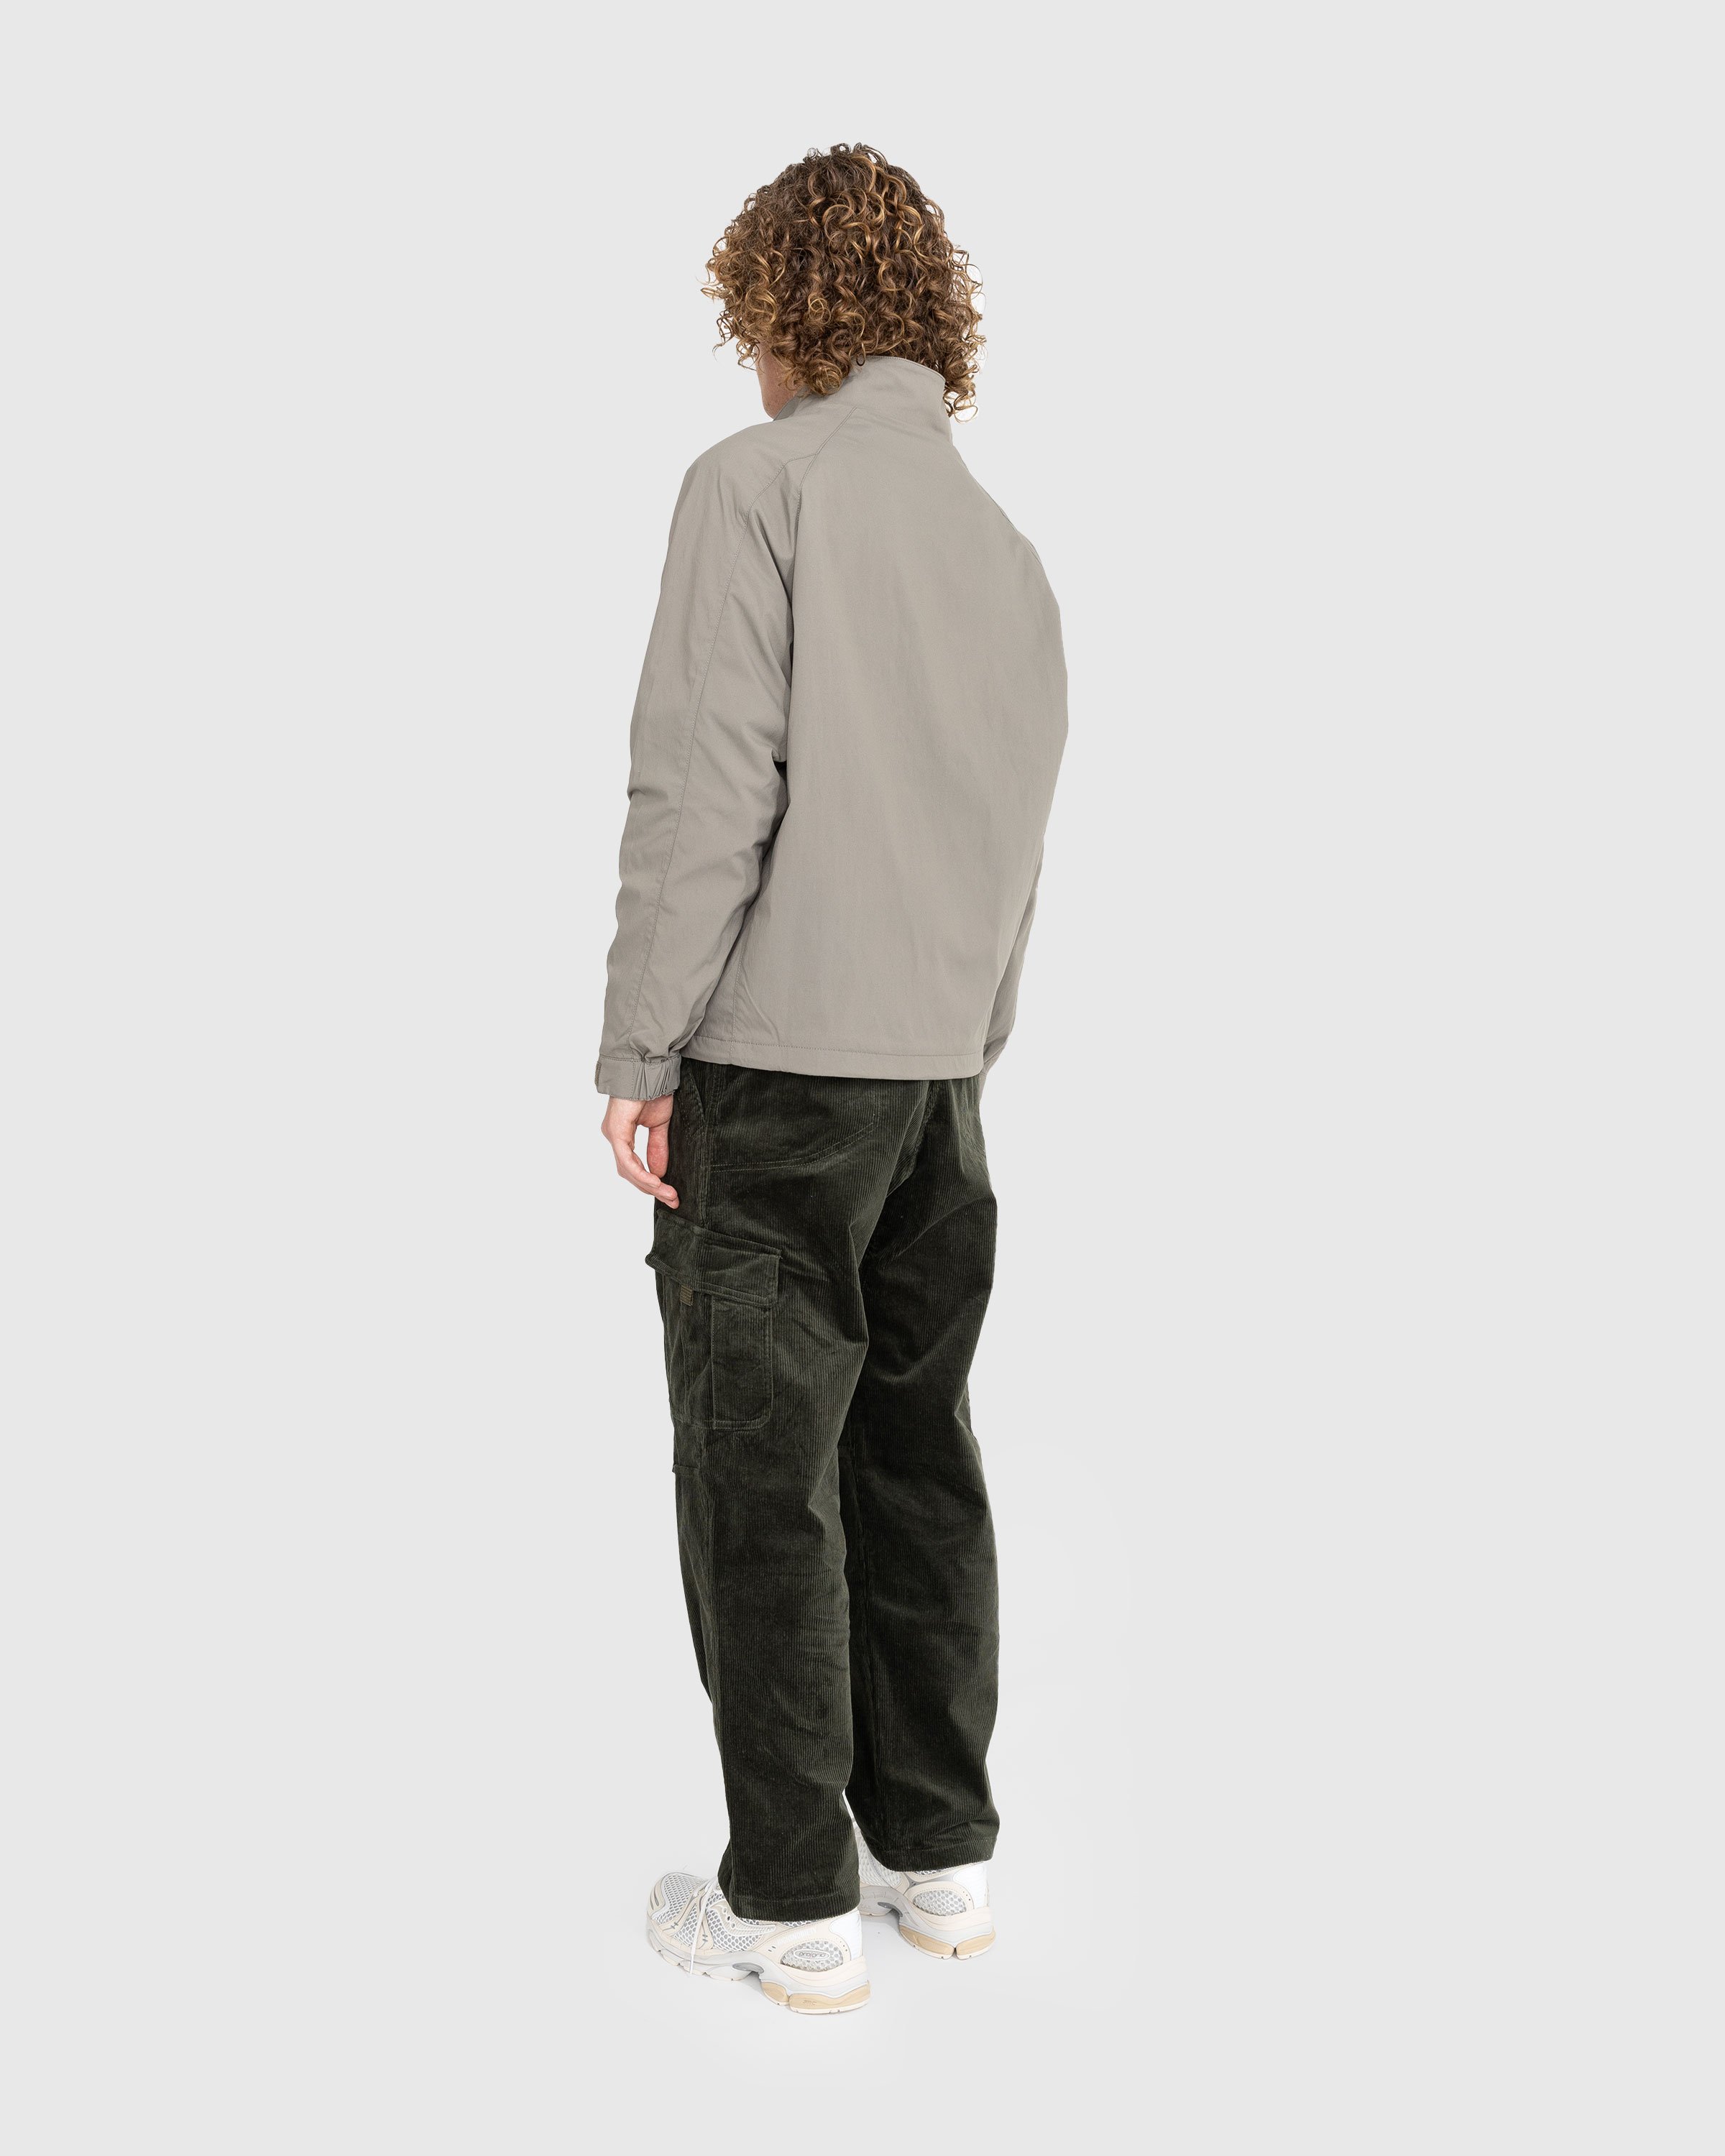 Gramicci - CORDUROY LOOSE CARGO PANT - Clothing - Green - Image 3